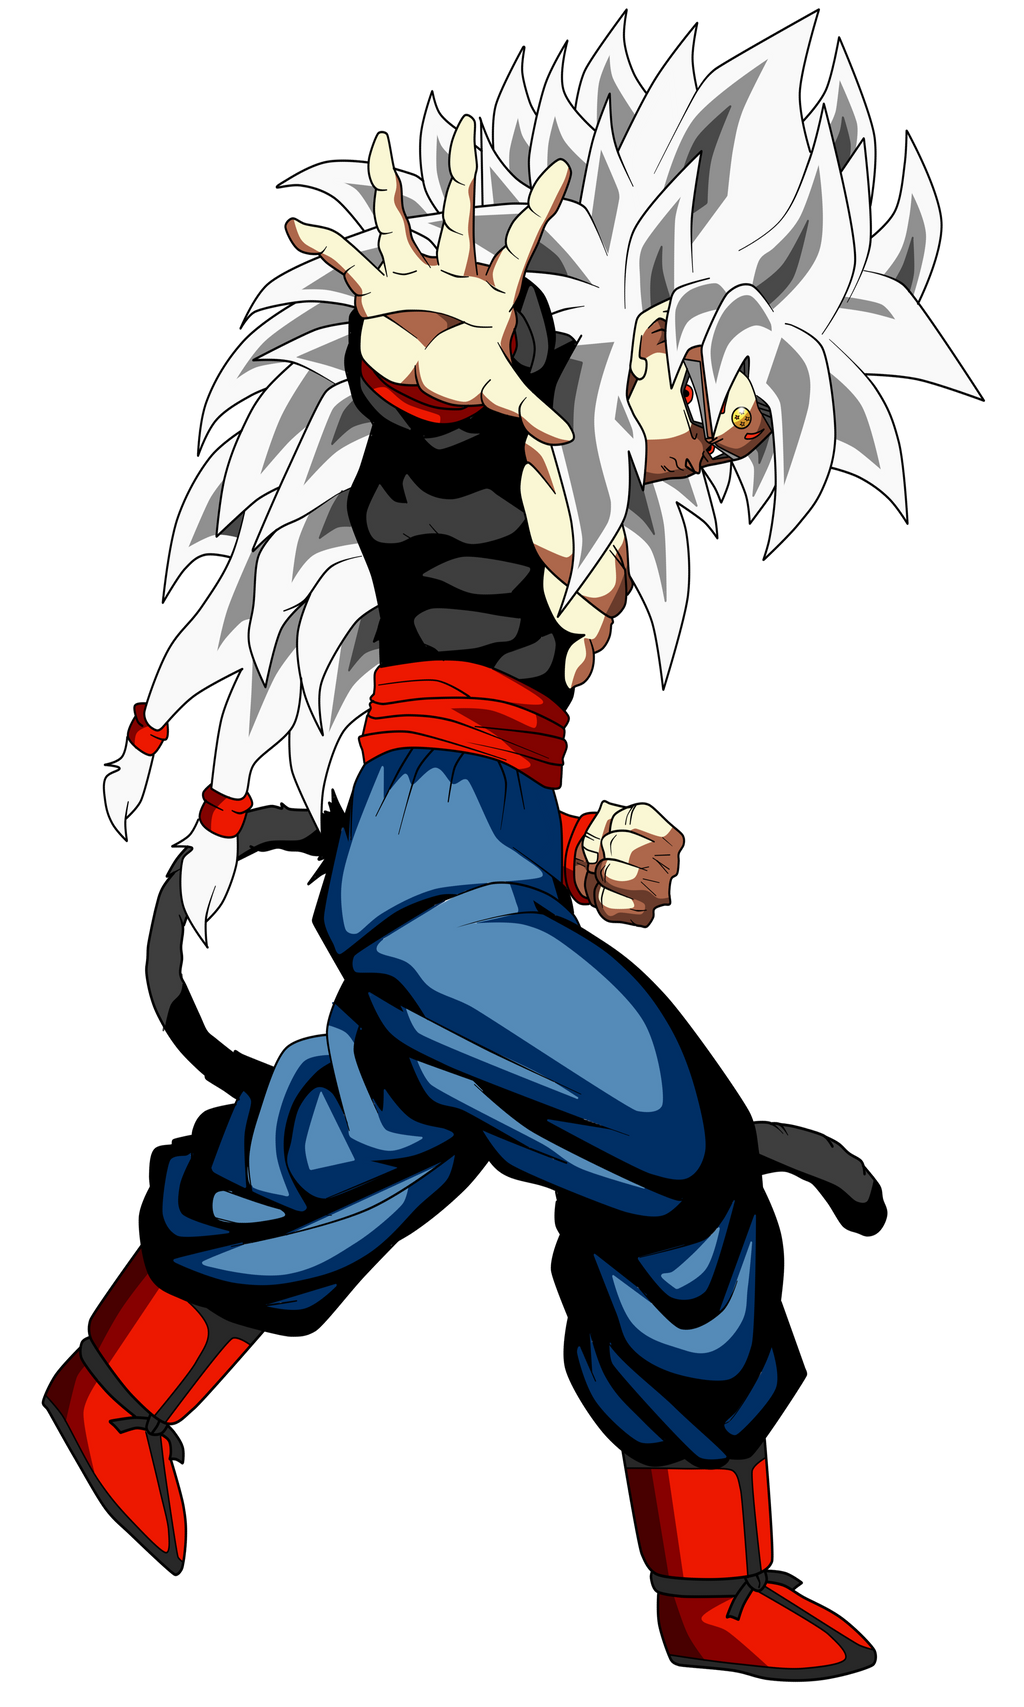 Goku Super Saiyan 6 by ChronoFz on DeviantArt